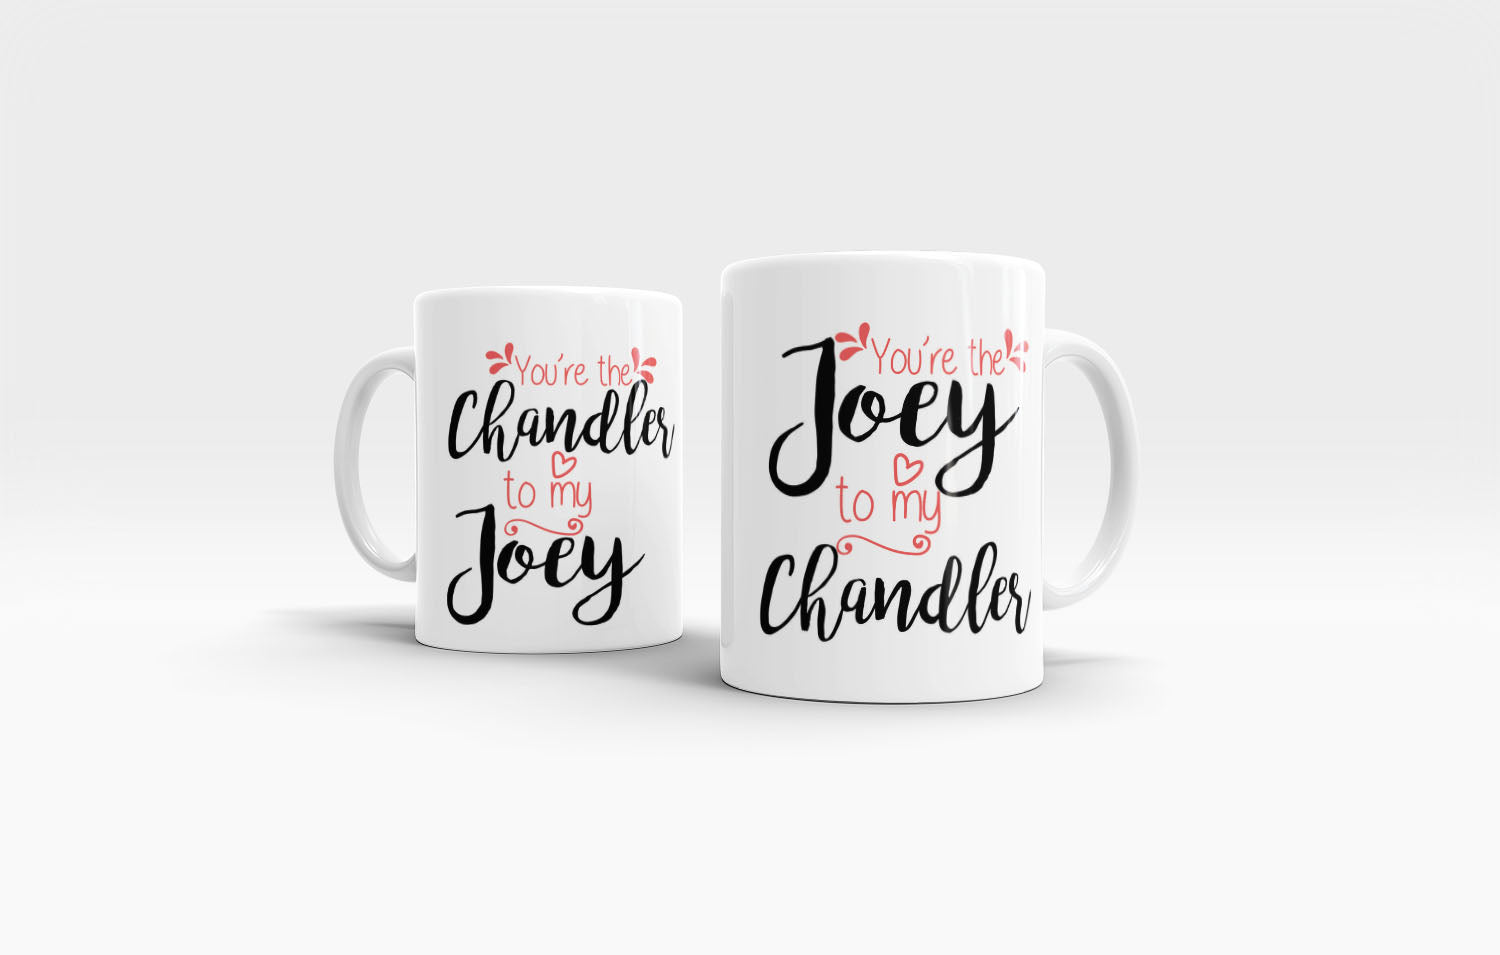 ChandlerJoey - Muggay.com - Mugs - Printing shop - truck Art mugs - Mug printing - Customized printing - Digital printing - Muggay 